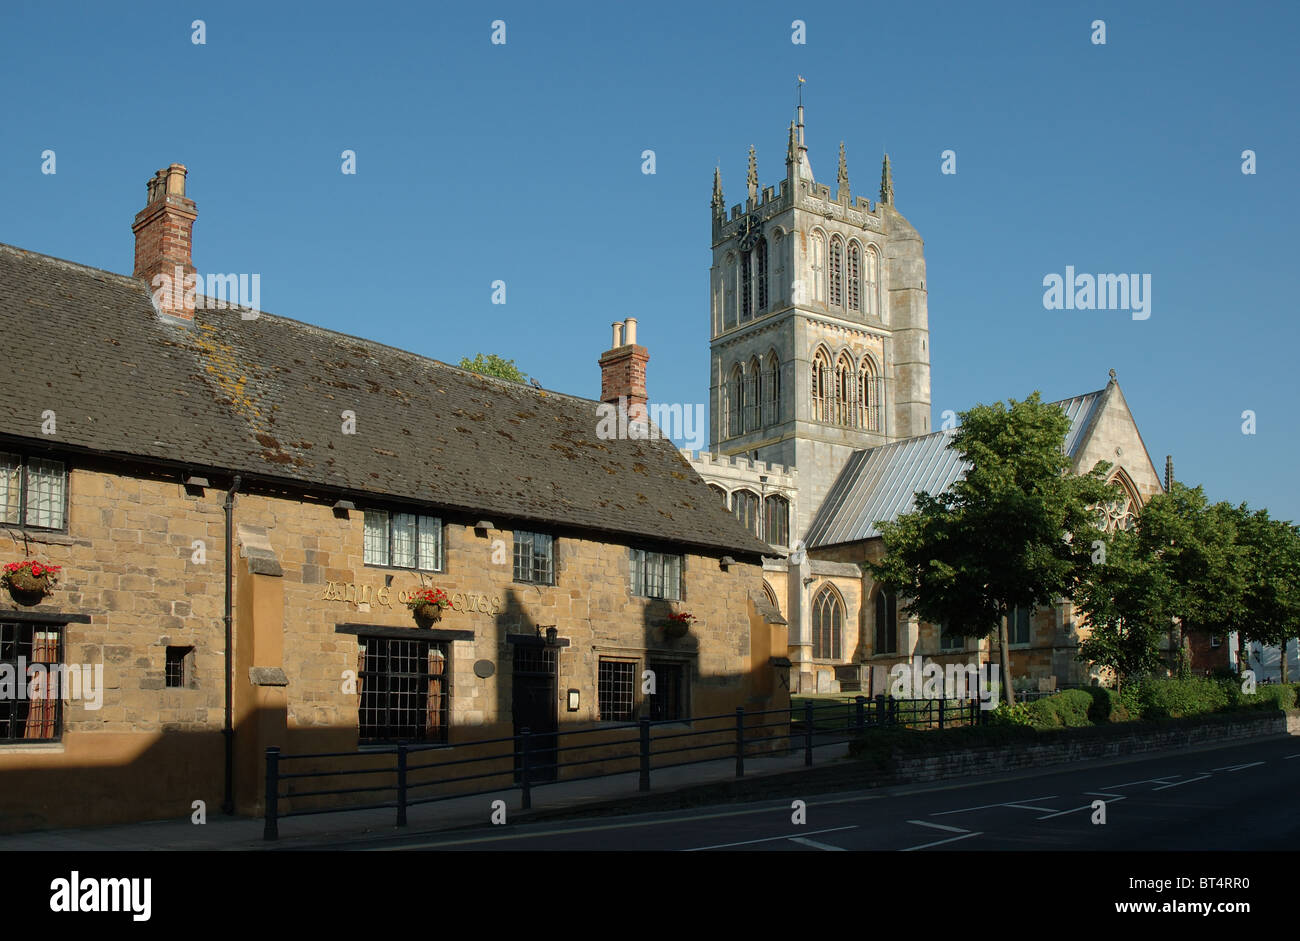 Anne of Cleves public house e St Marys chiesa, Burton Street, melton mowbray, leicestershire, England, Regno Unito Foto Stock